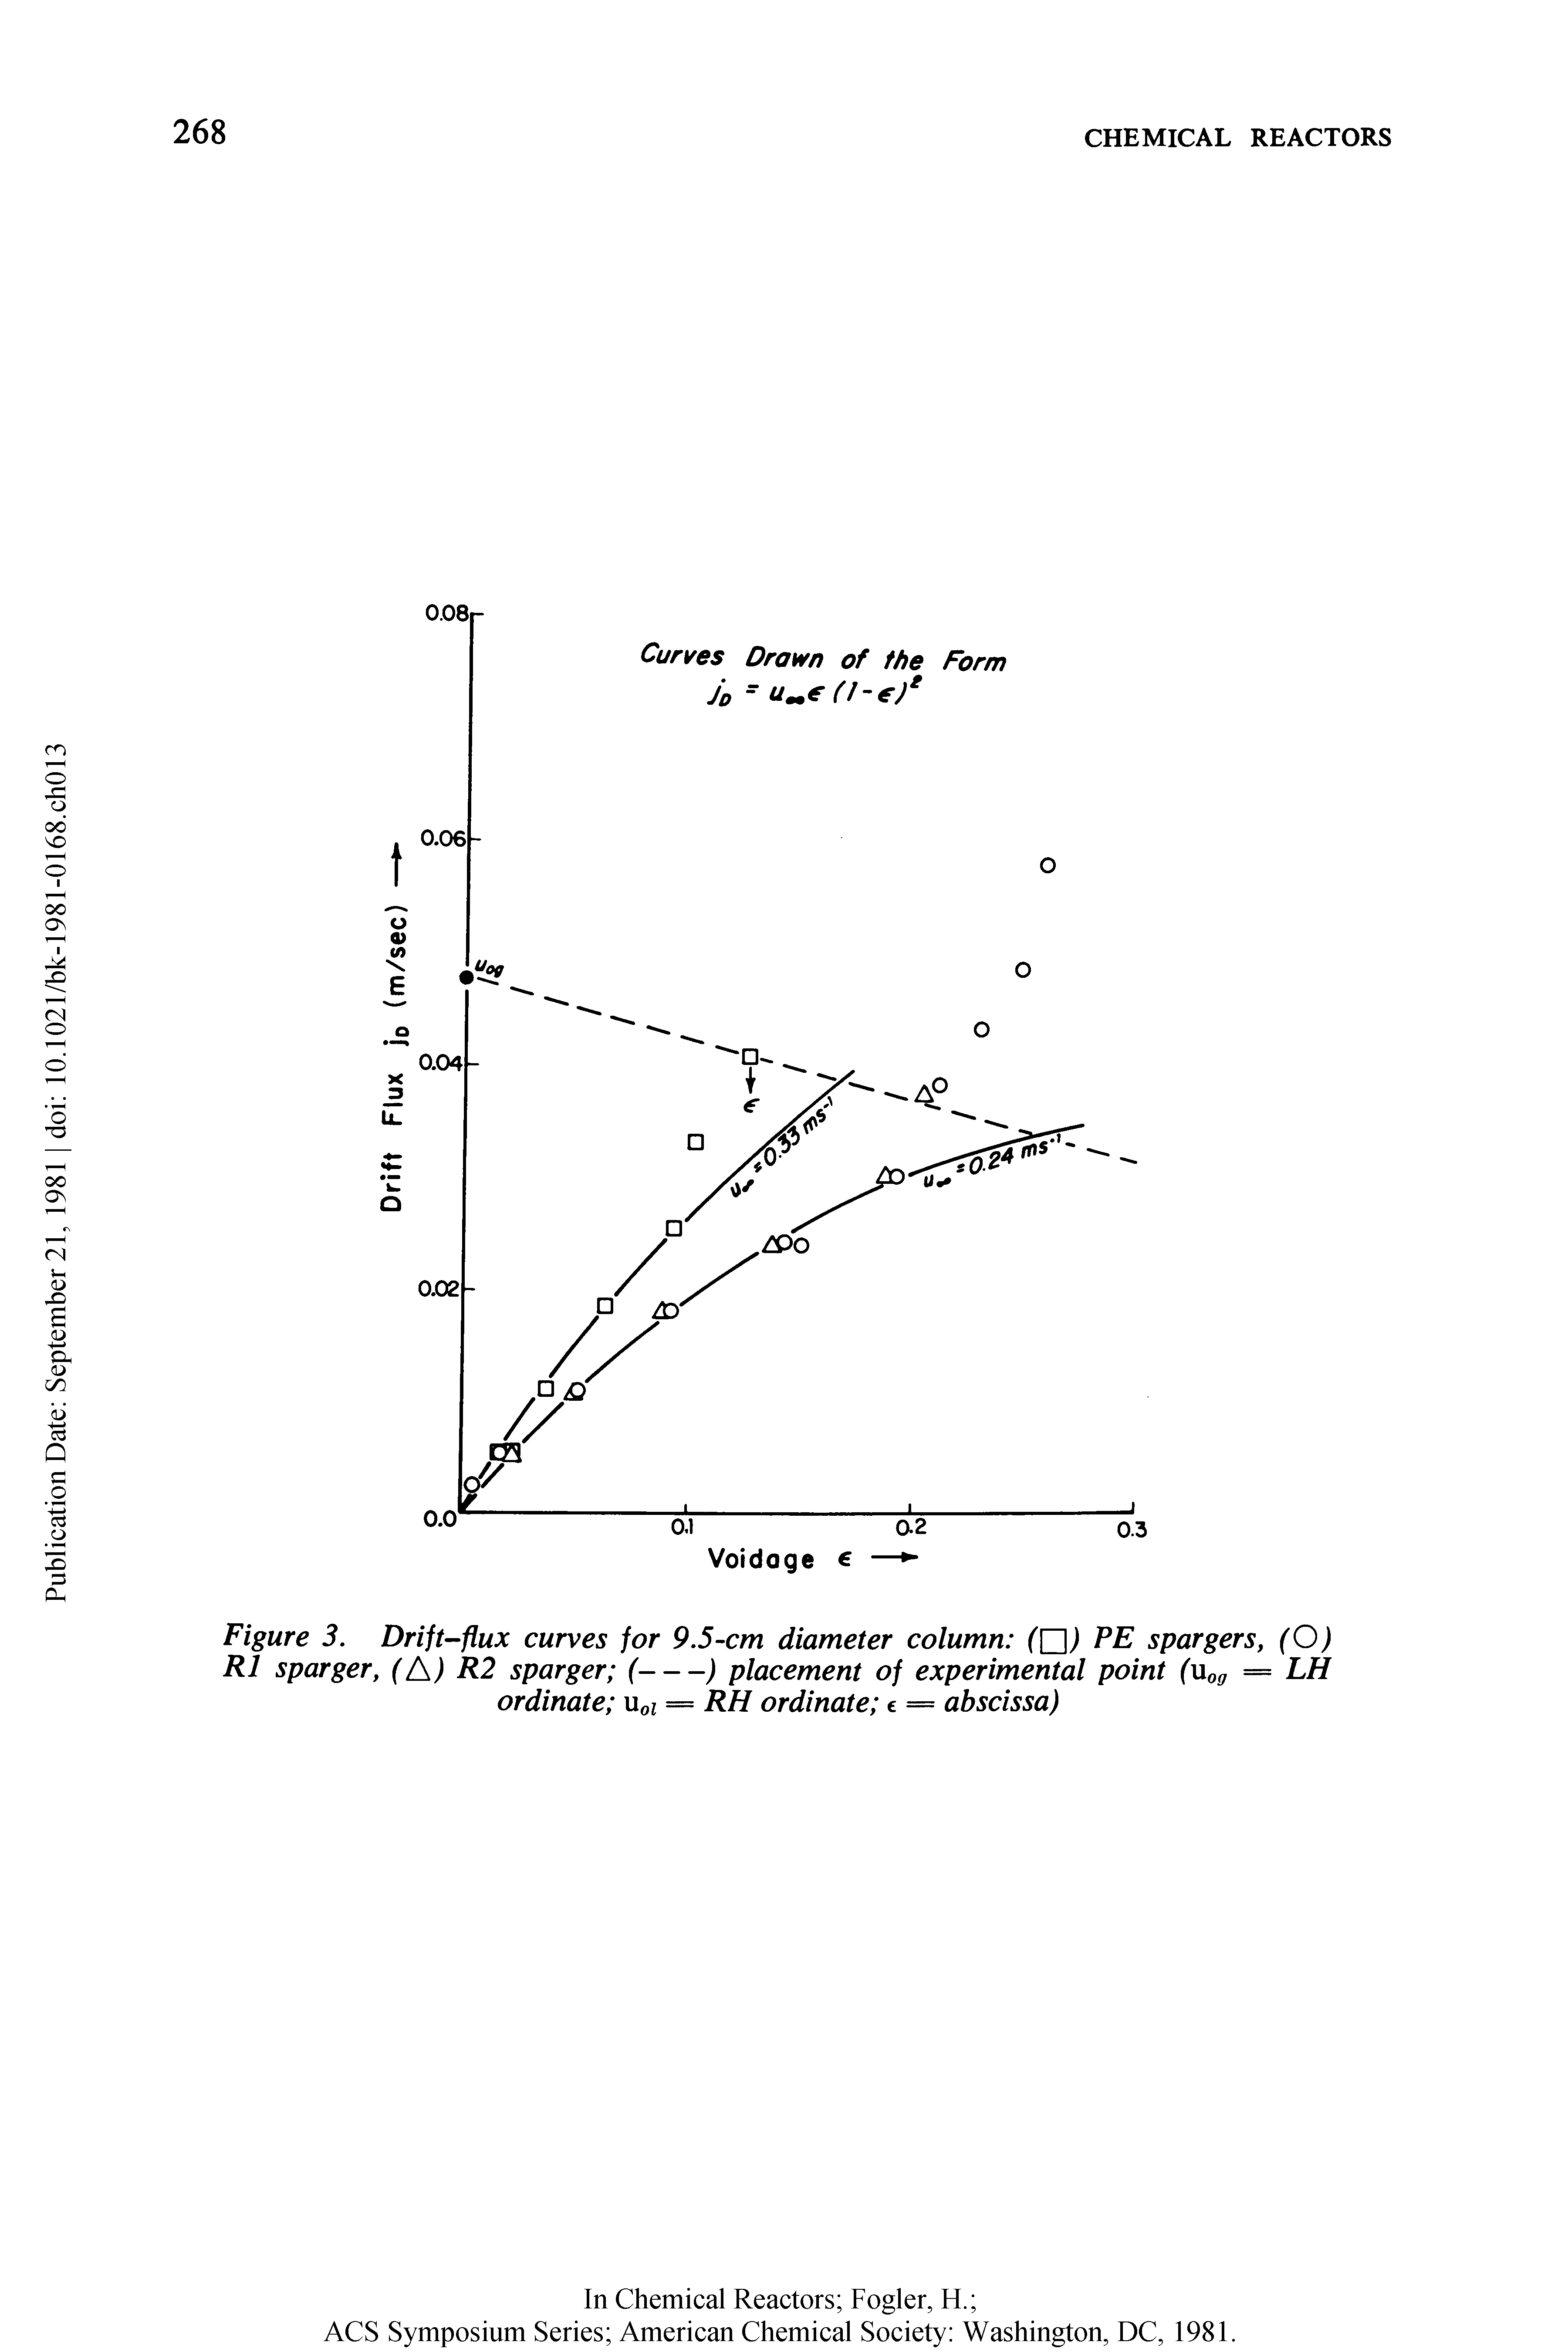 Figure 3. Drift-flux curves for 9.5-cm diameter column ([ ) PE spargers, (O)...